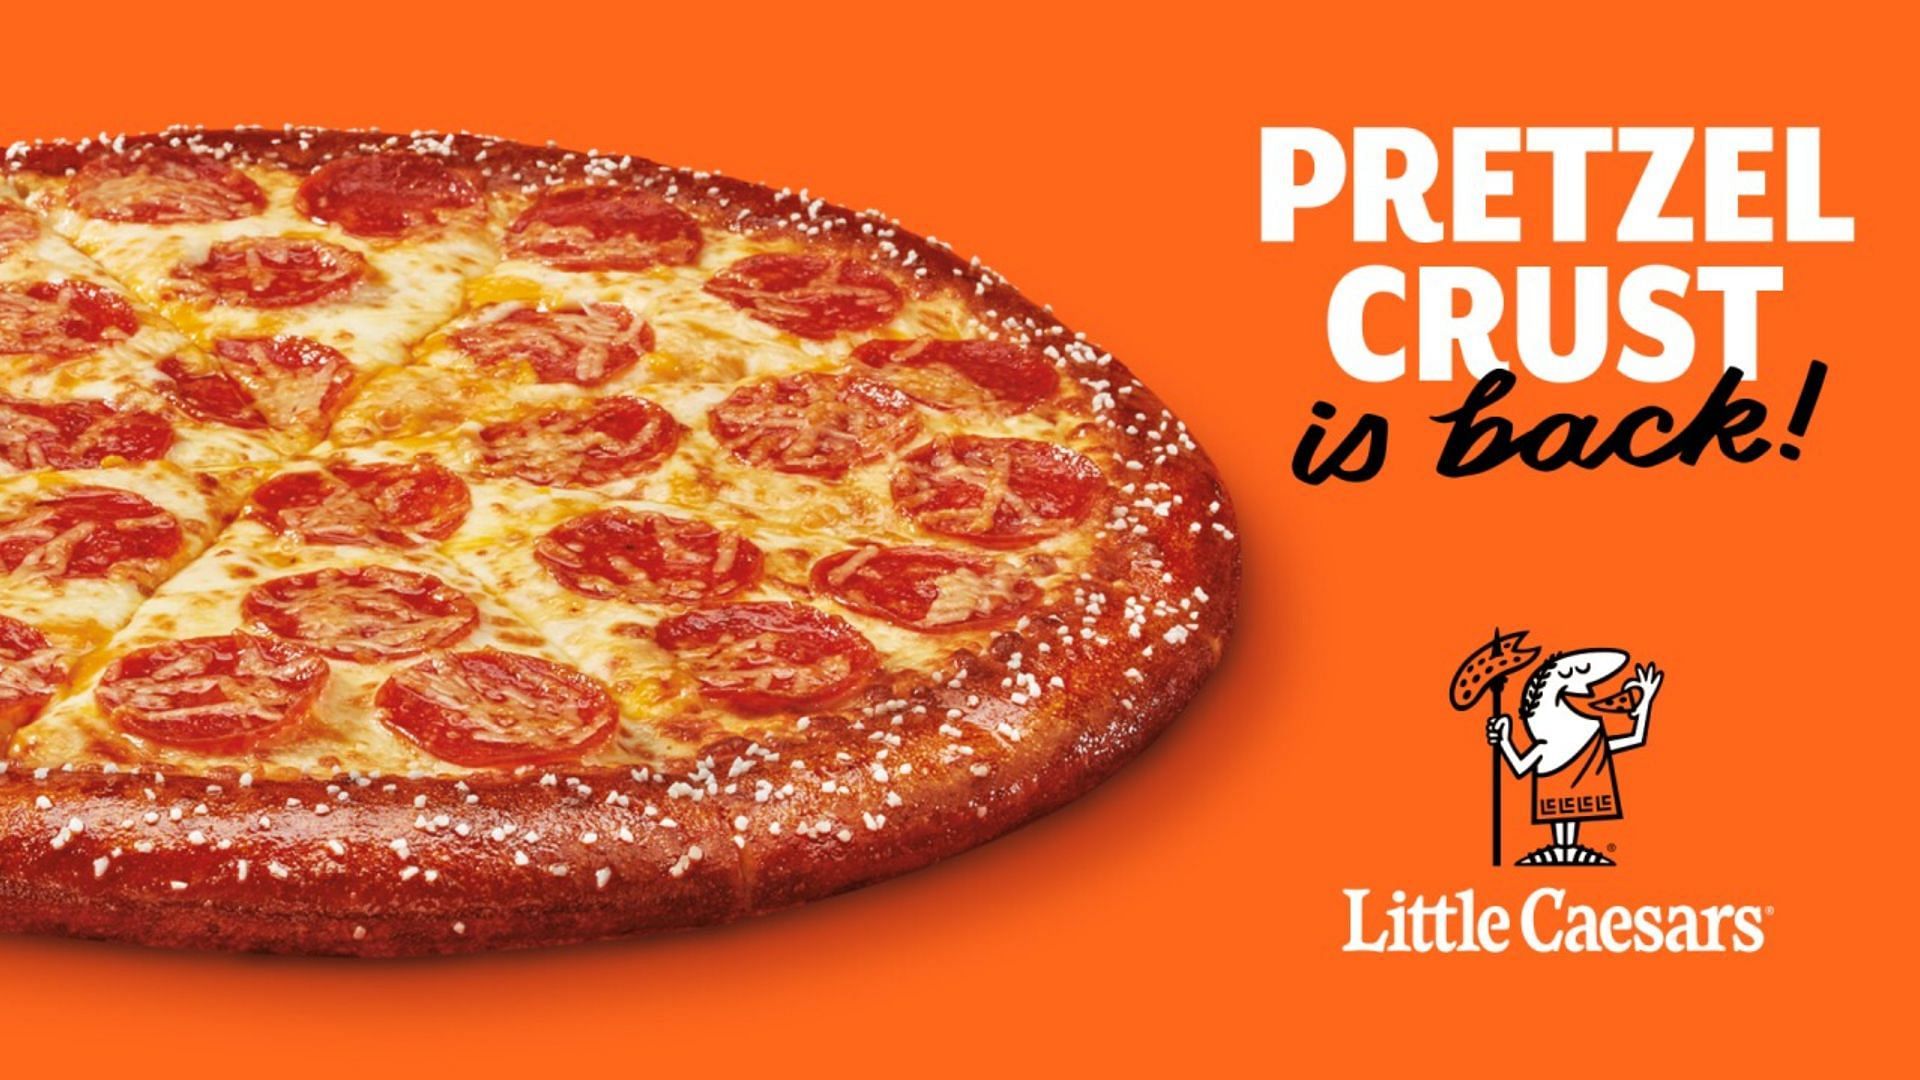 Little Caesars is bringing back the Pretzel Crust Pizza this spring (Image via Little Caesars)